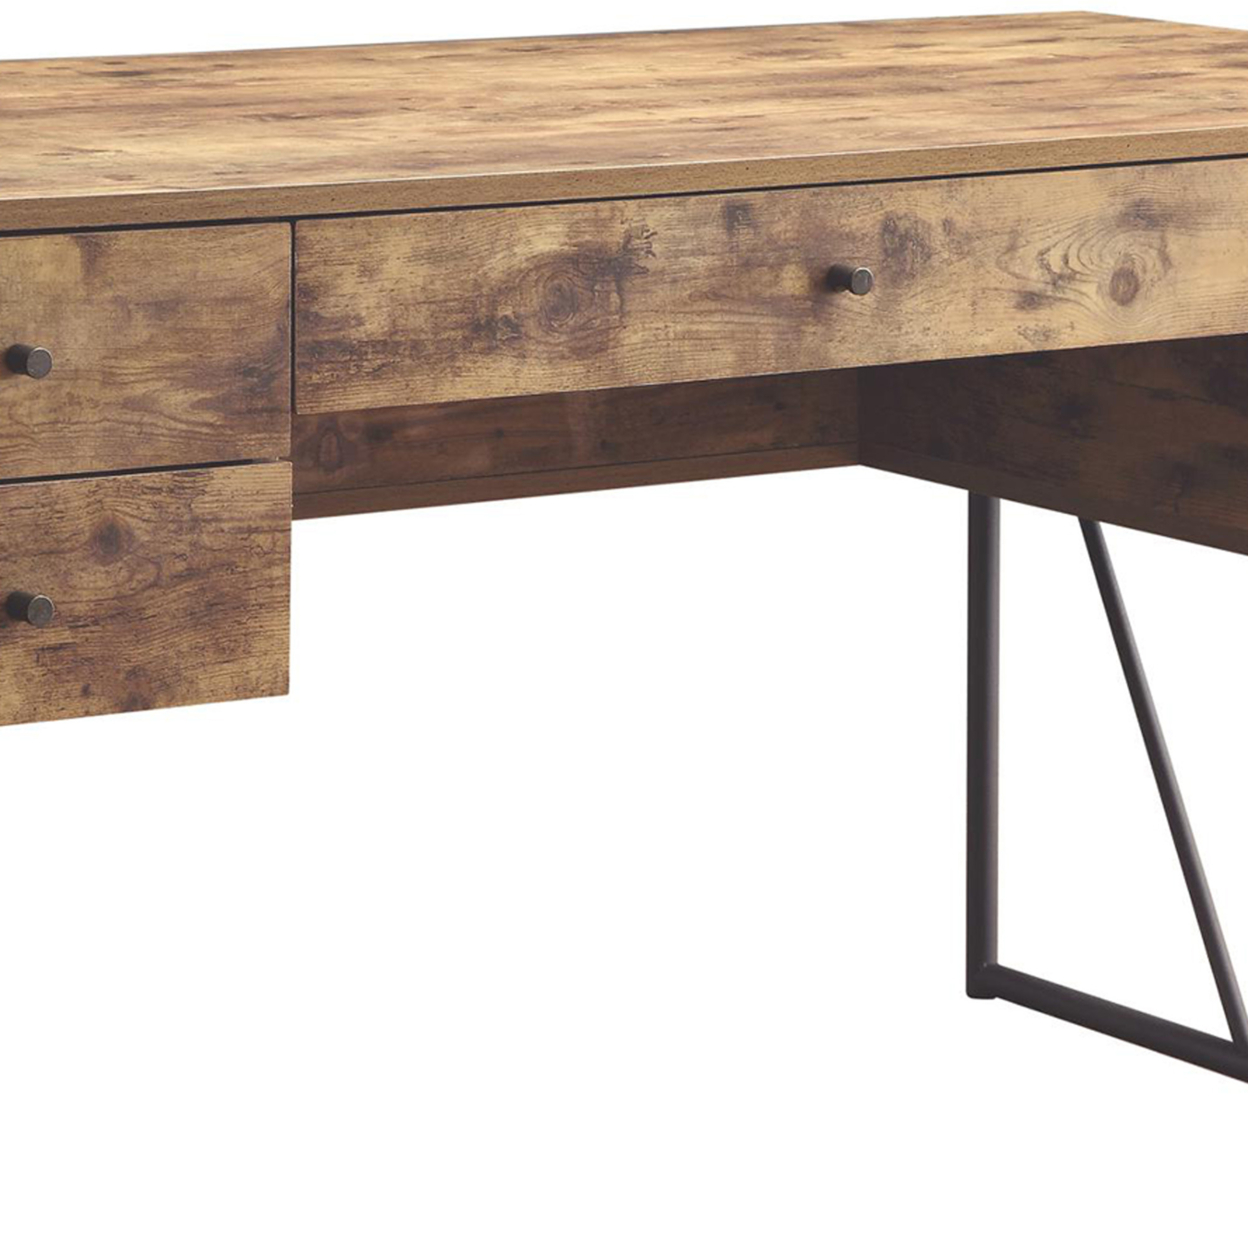 Voguish Style Writing Desk With 4 Drawers, Brown- Saltoro Sherpi